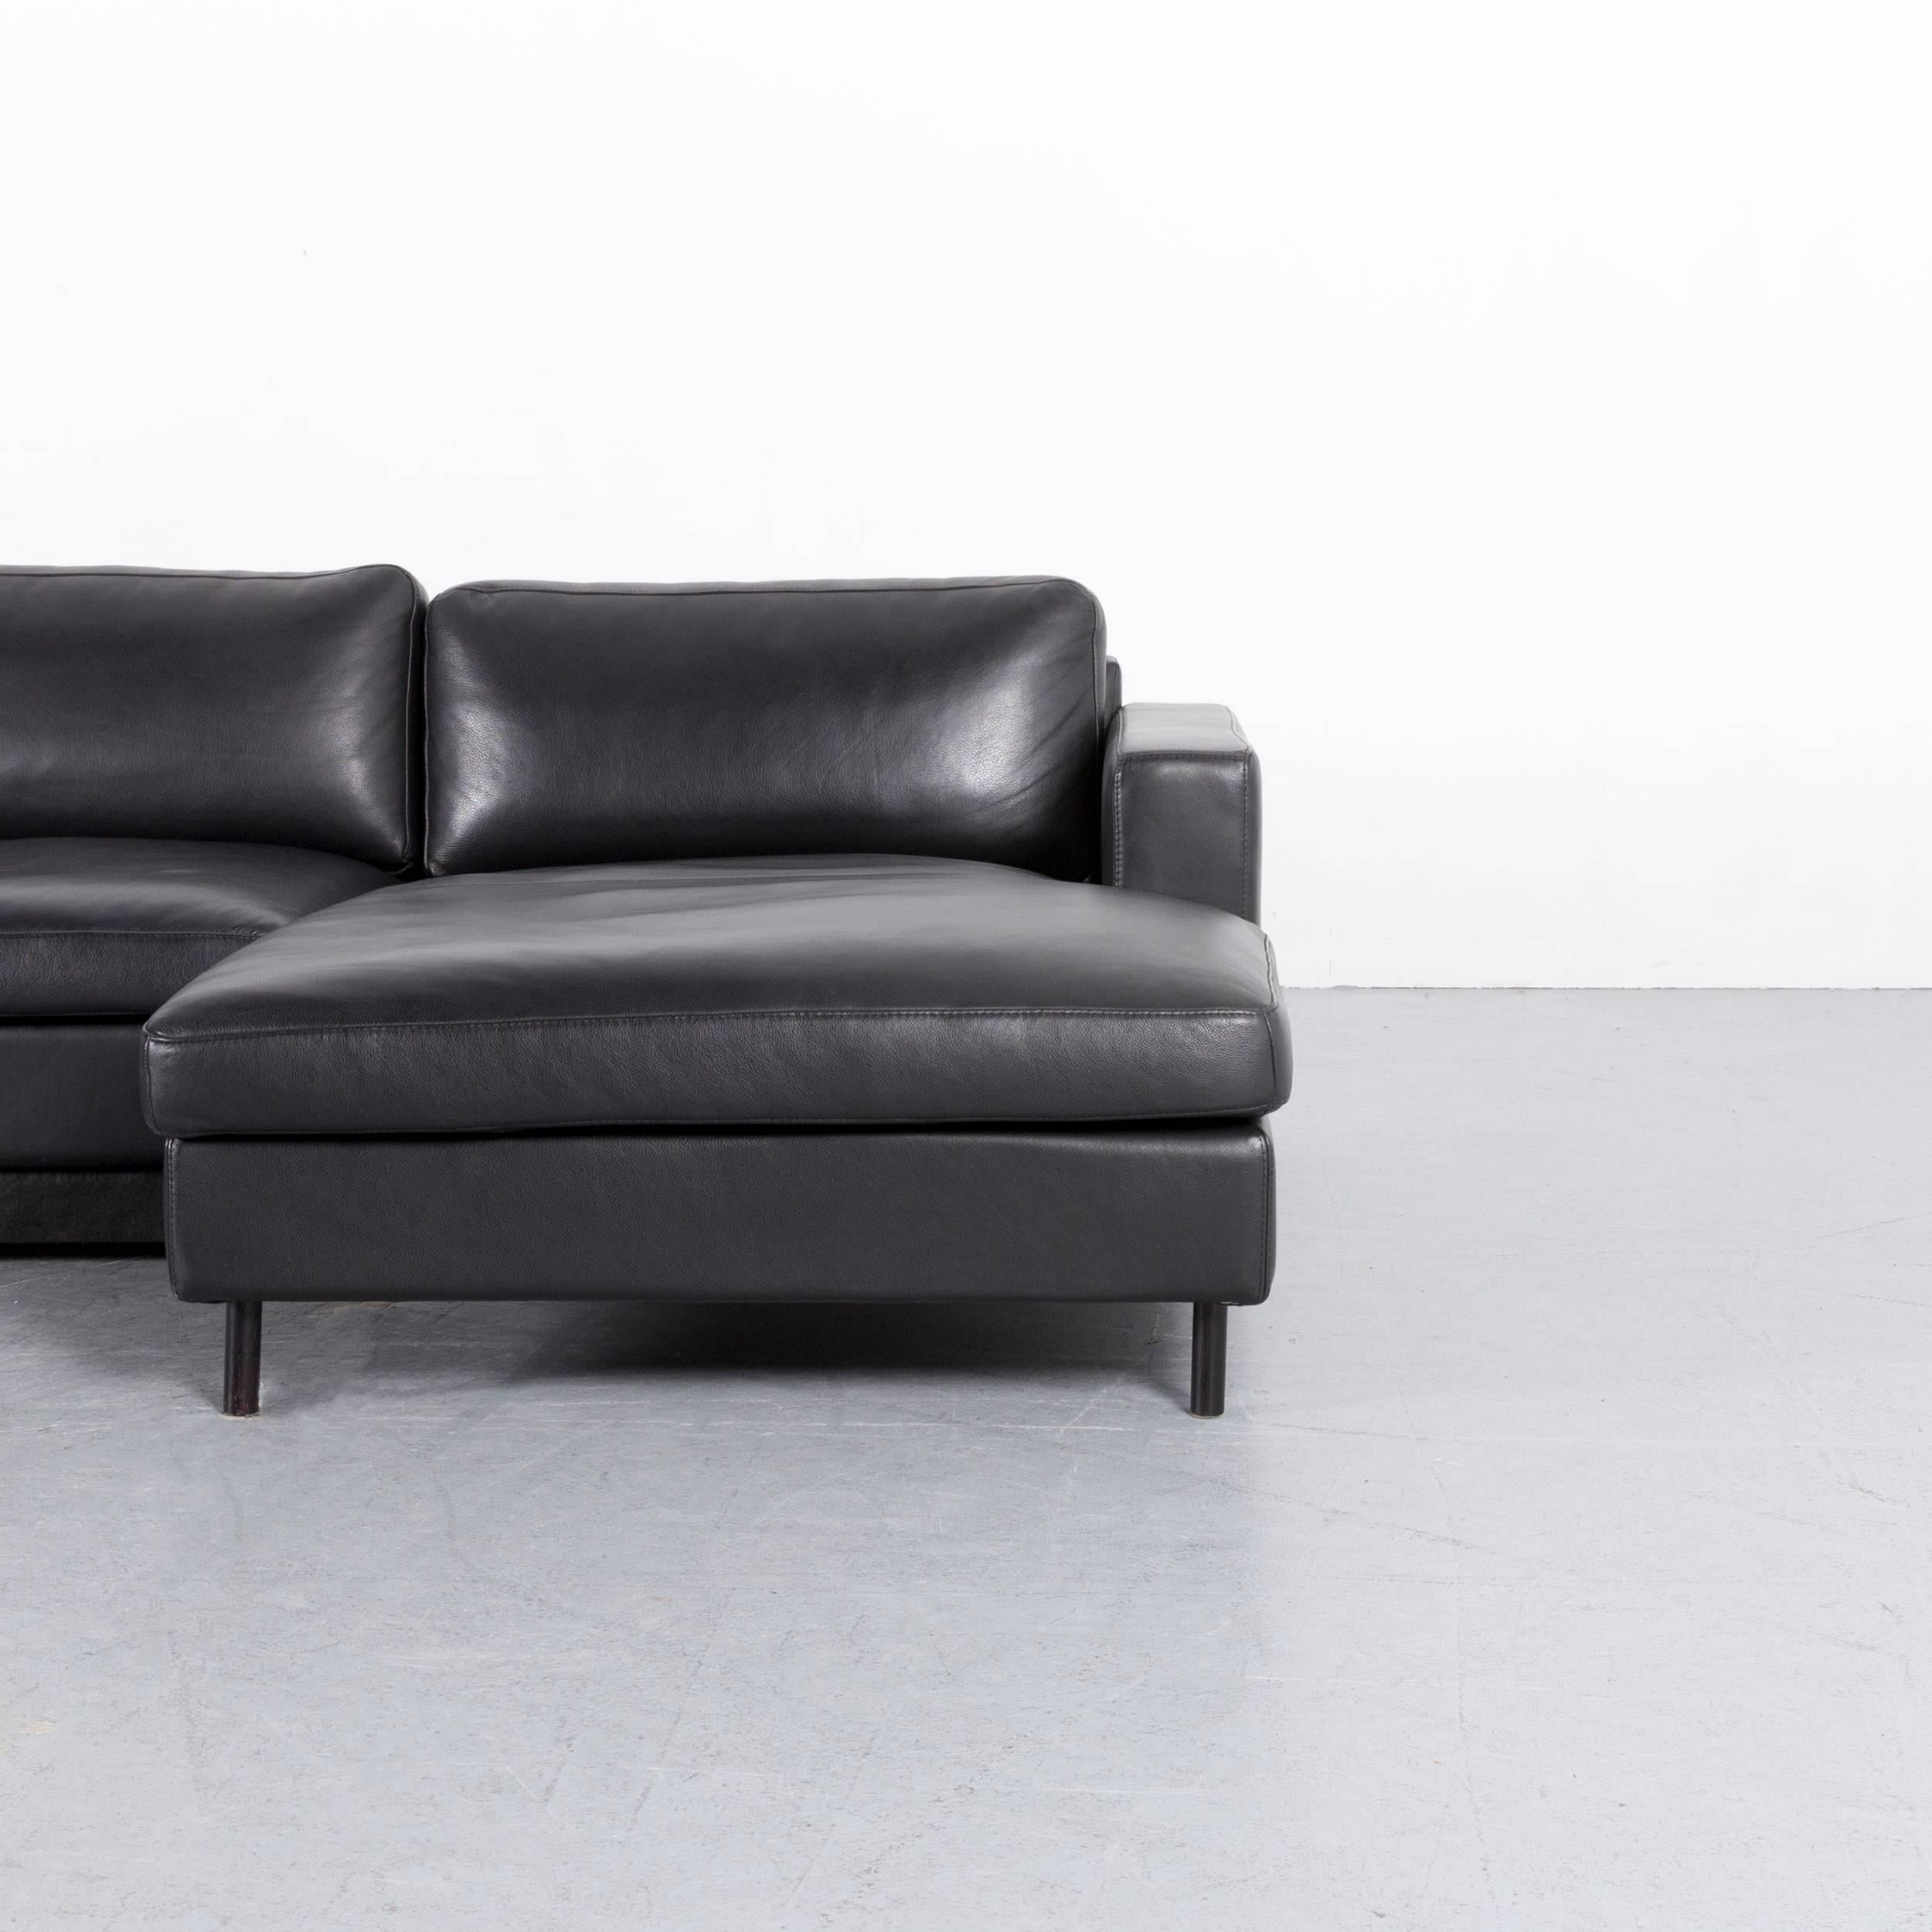 Swedish Bolia Leather Corner-Sofa Black Bed-Sofa